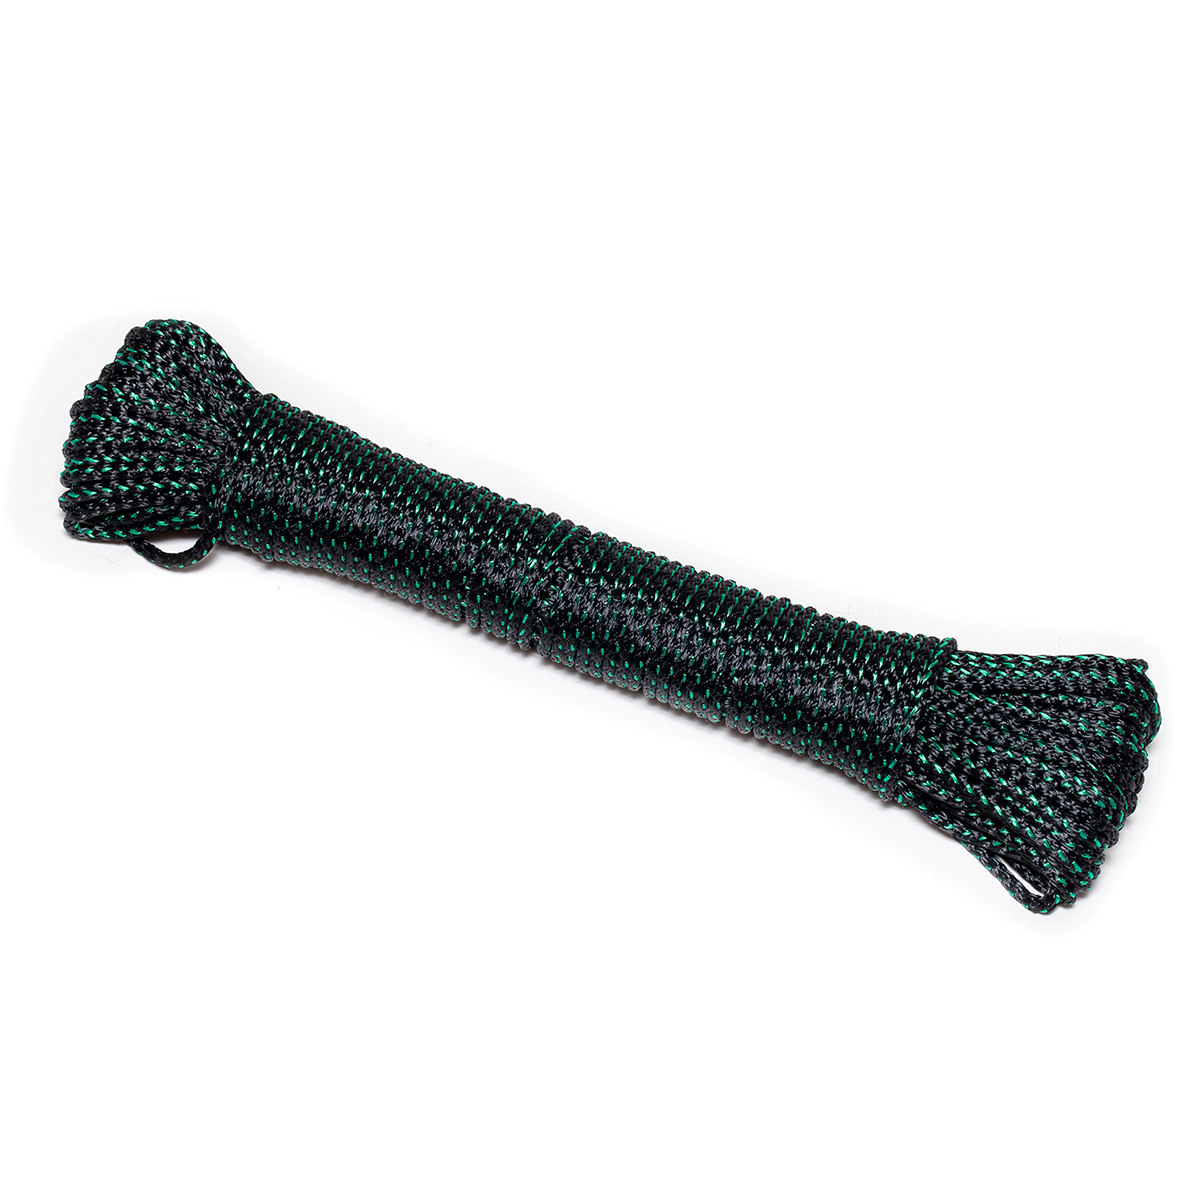 Шнур утяжеляющий Петроканат, 31 м, черно-зеленый, вес 24 г/м шнур для вязания 100% полиэфир 1мм 200м 75±10гр 09 кофе